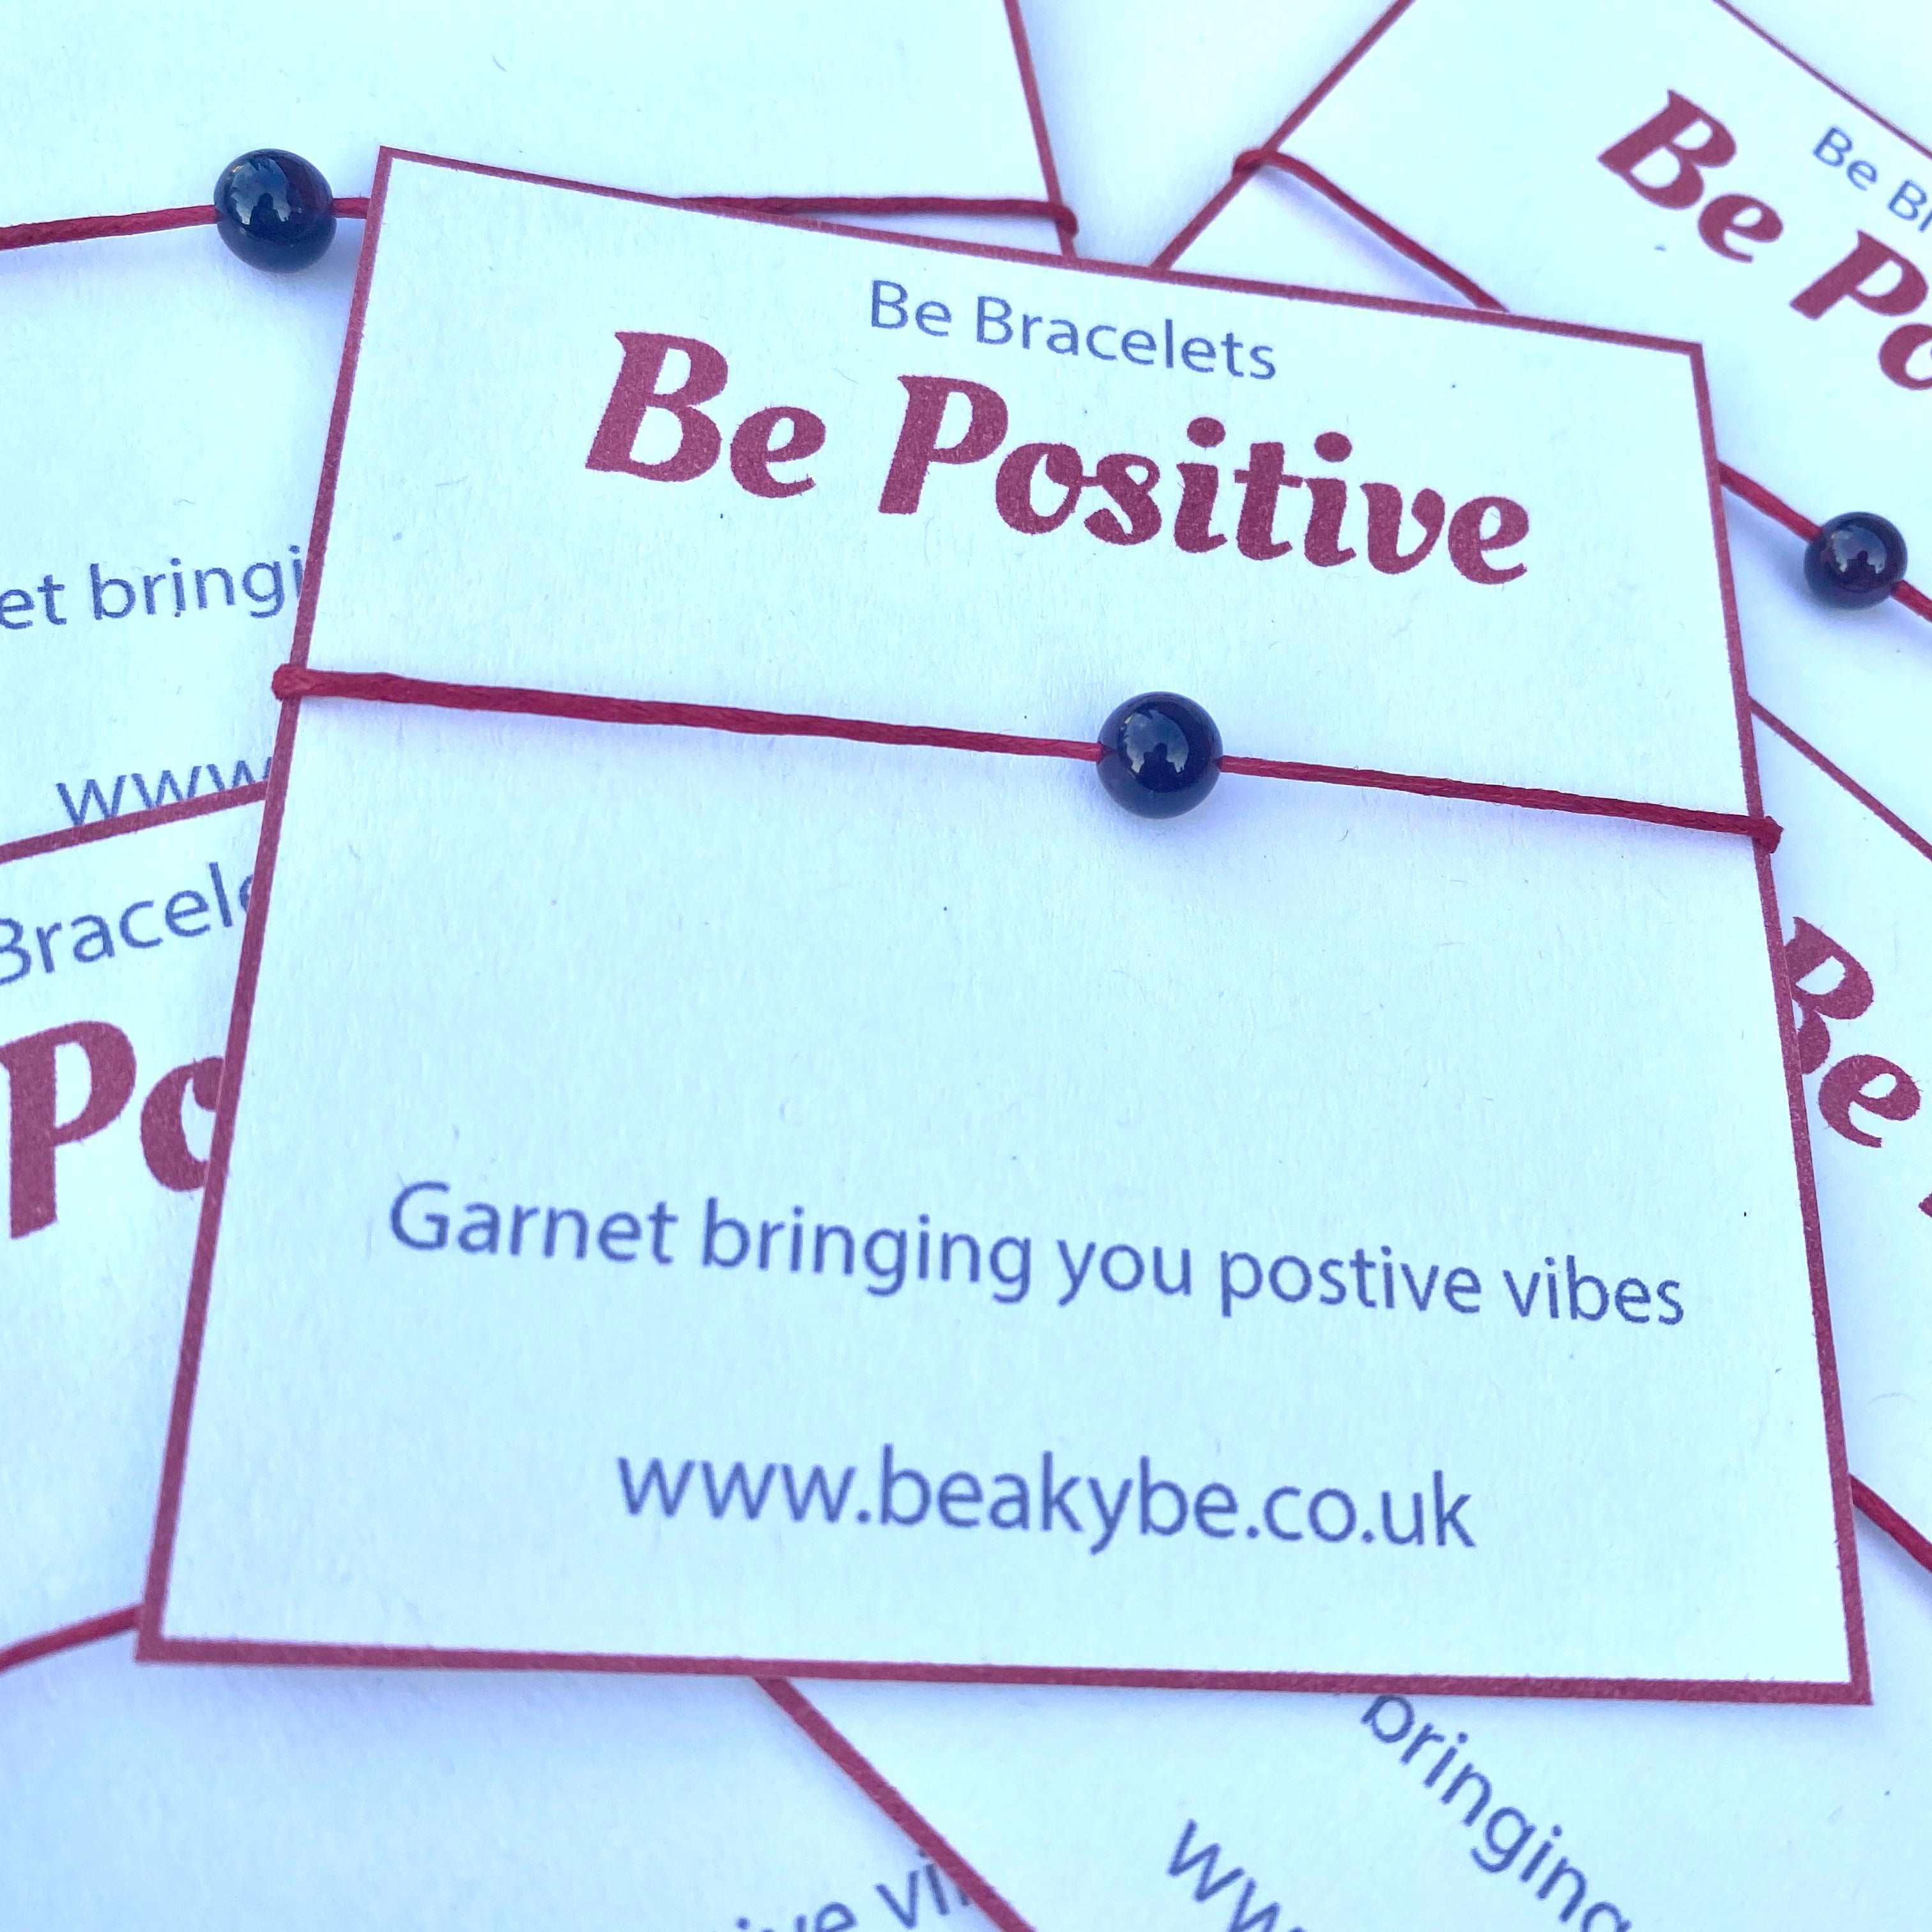 Be Positive - Be Bracelet - Garnet String Bracelet Gifts